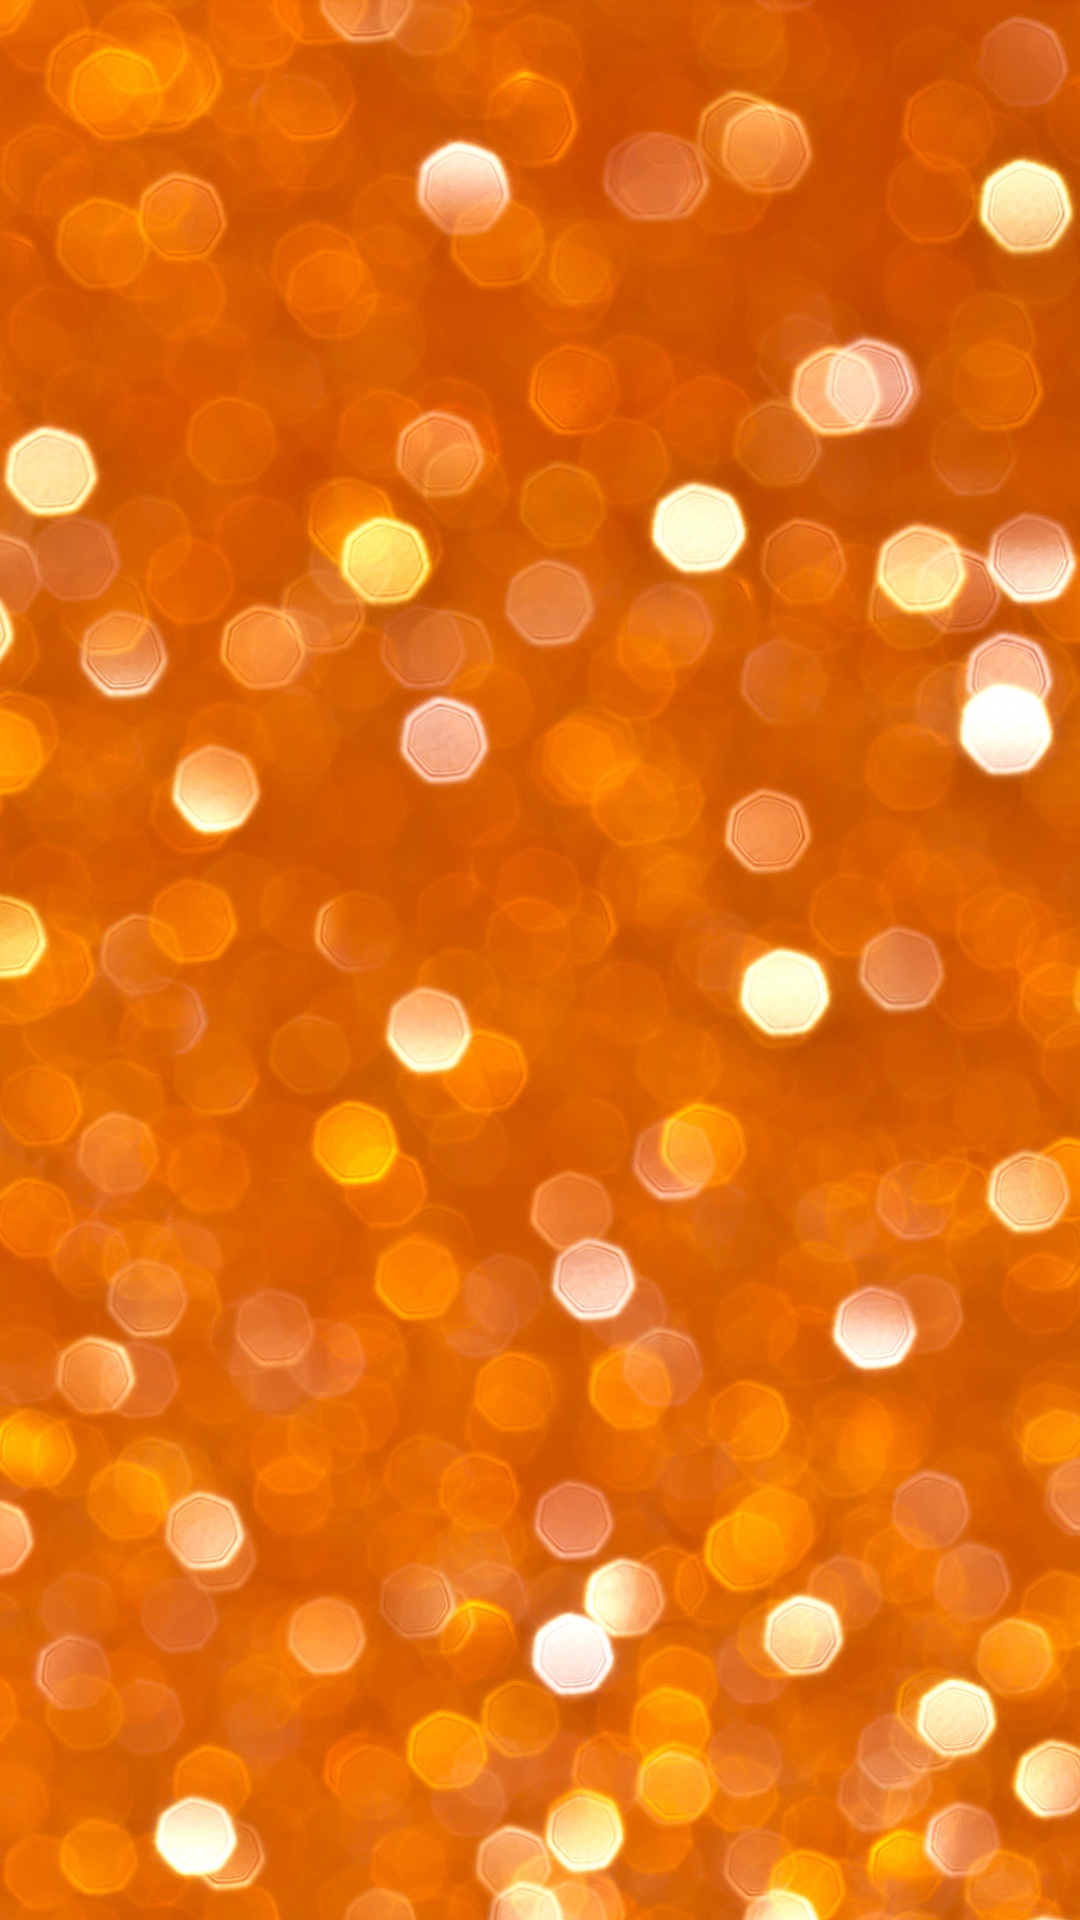 Orange and White Bokeh Lights. Wallpaper in 1080x1920 Resolution